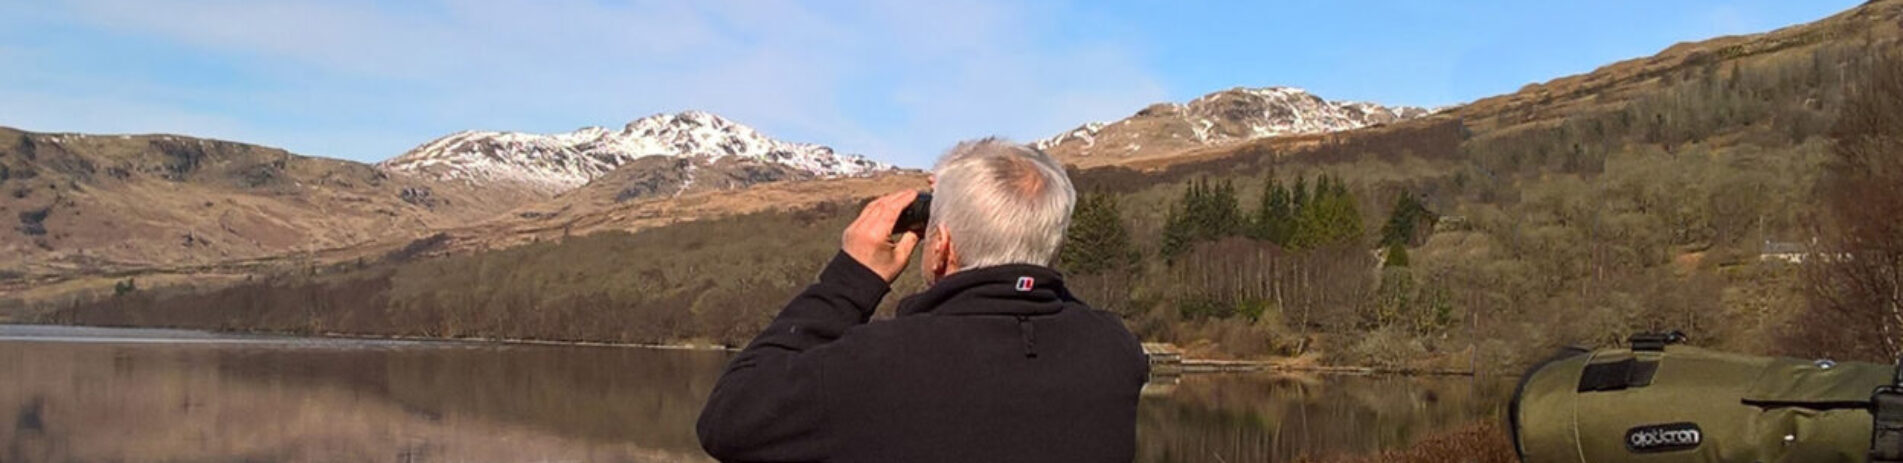 Volunteer with binoculars on wildlife survey